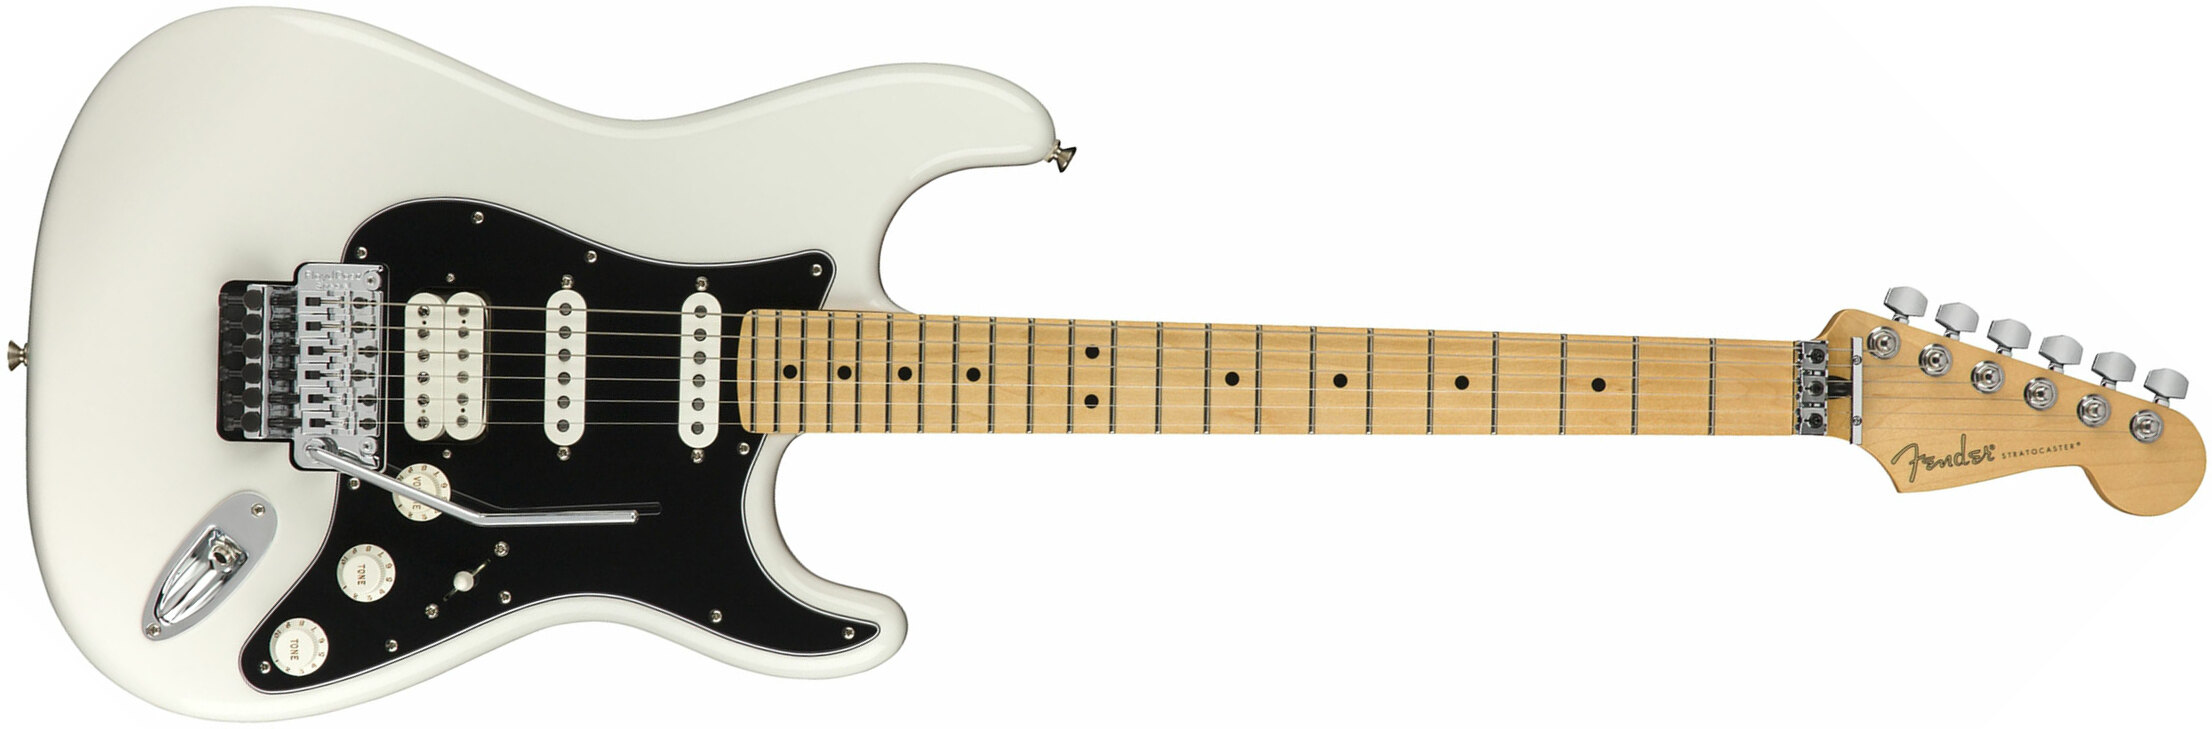 Fender Strat Player Floyd Rose Mex Hss Fr Mn - Polar White - Str shape electric guitar - Main picture